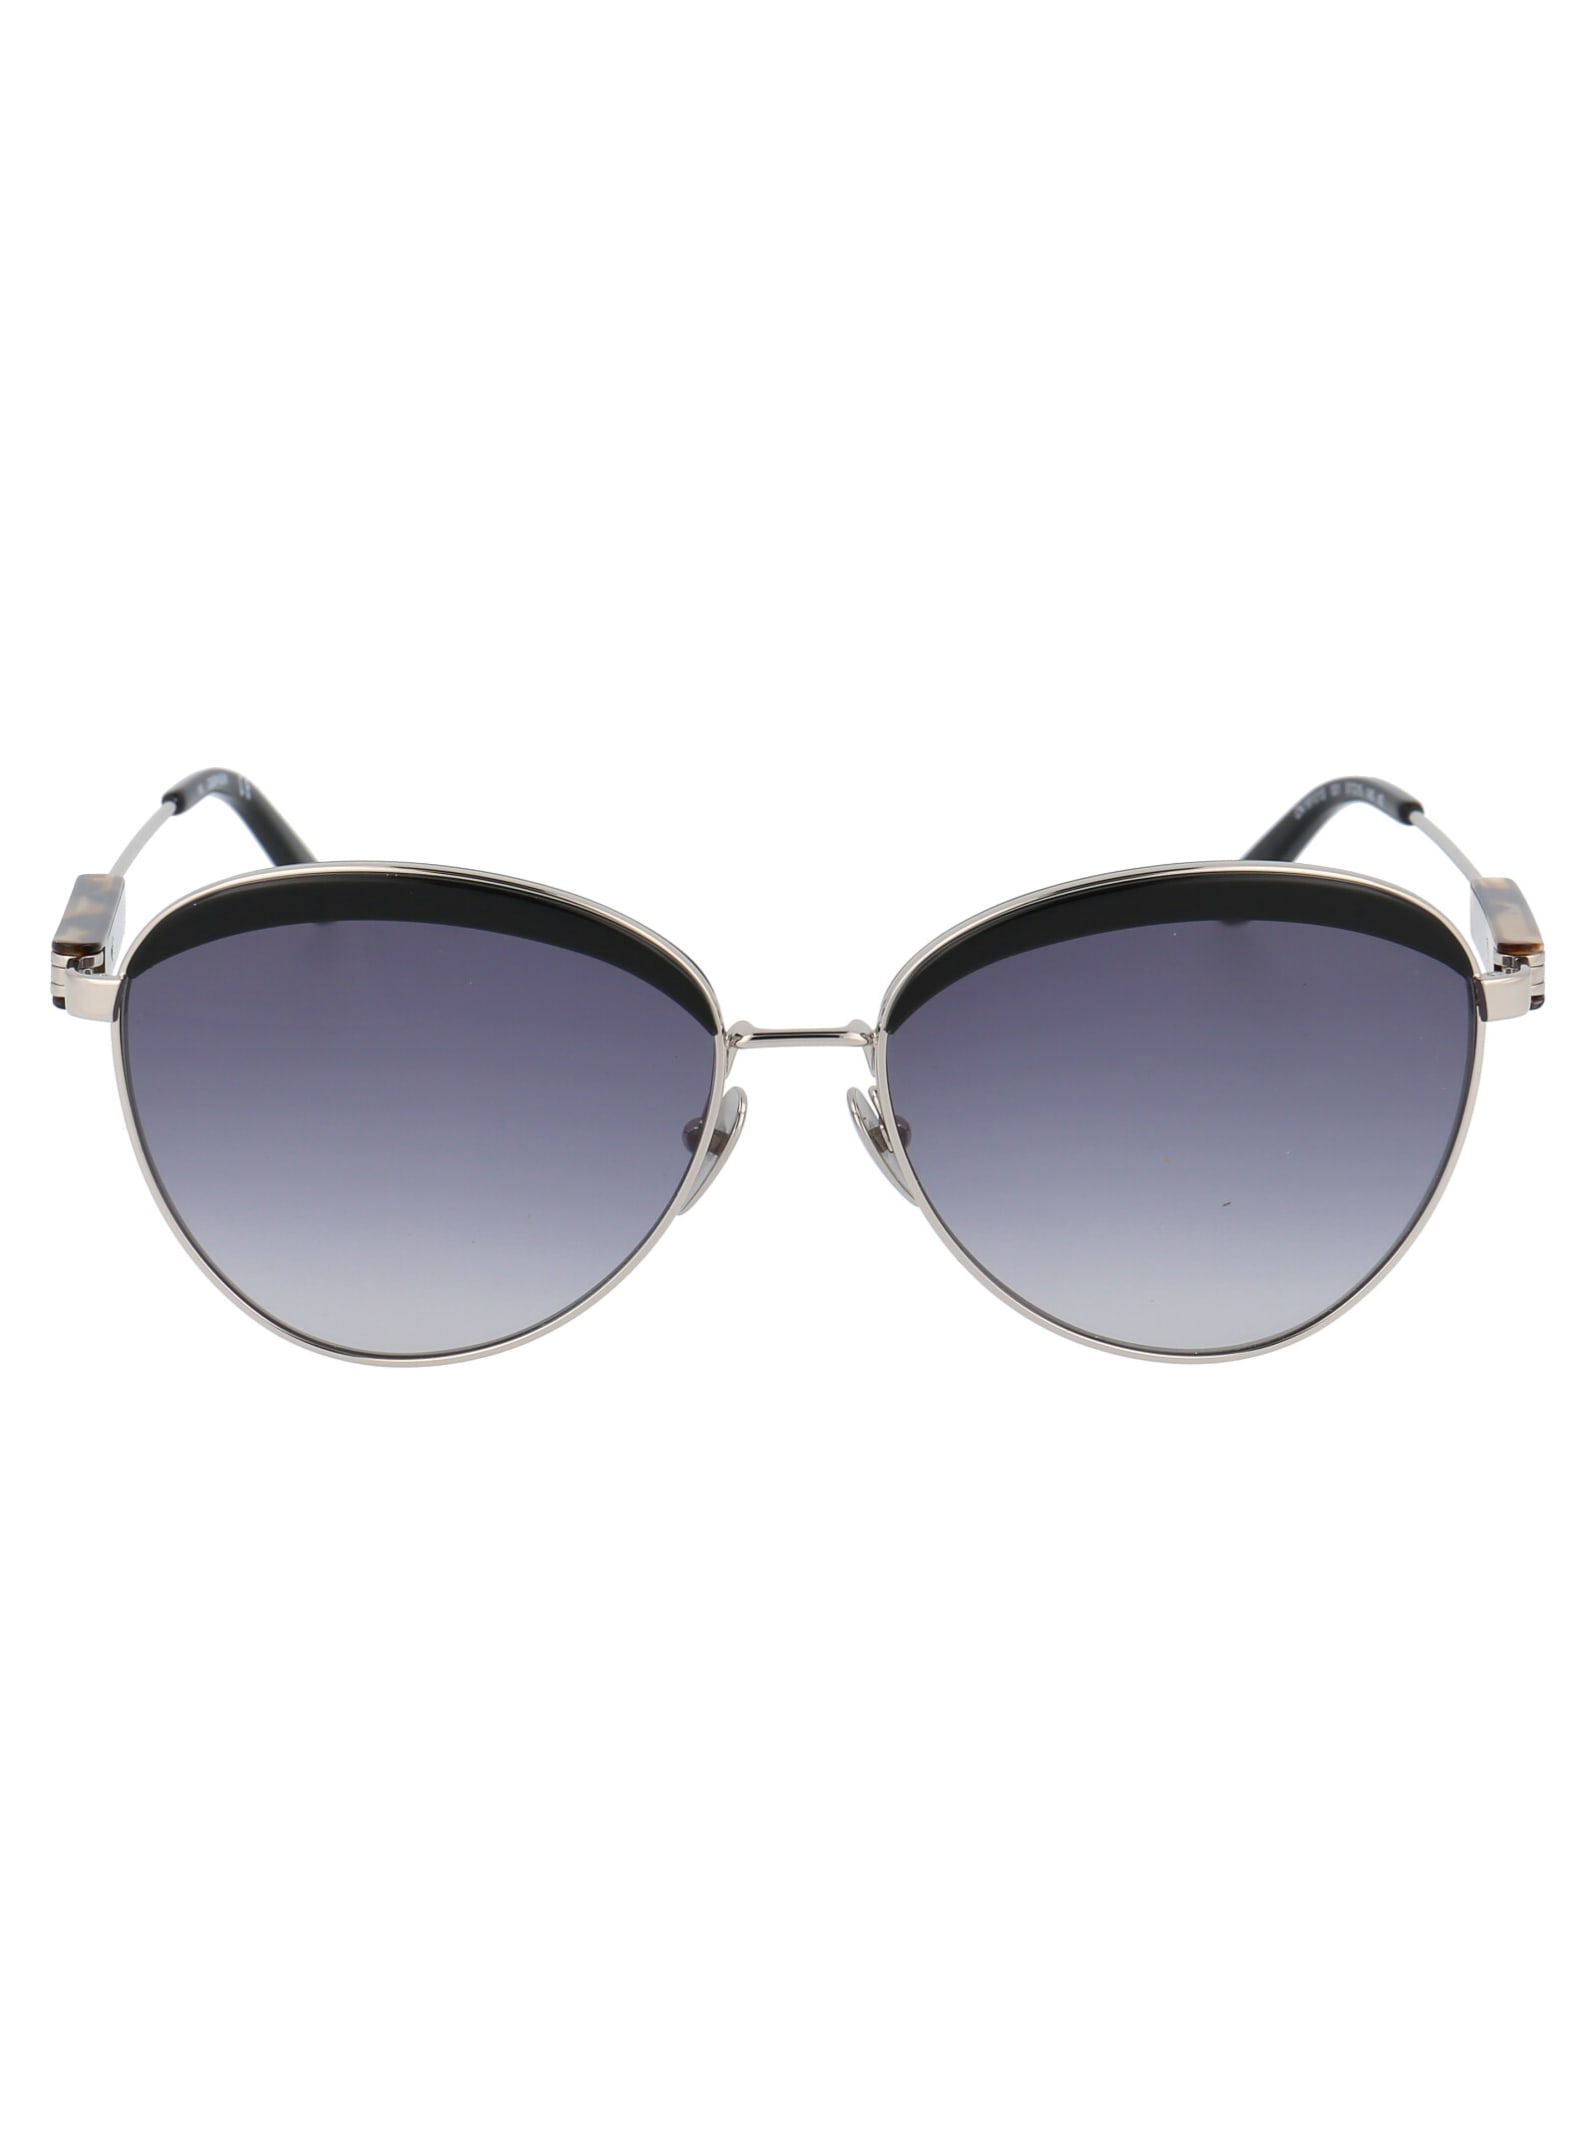 Calvin Klein Ck19101s Sunglasses